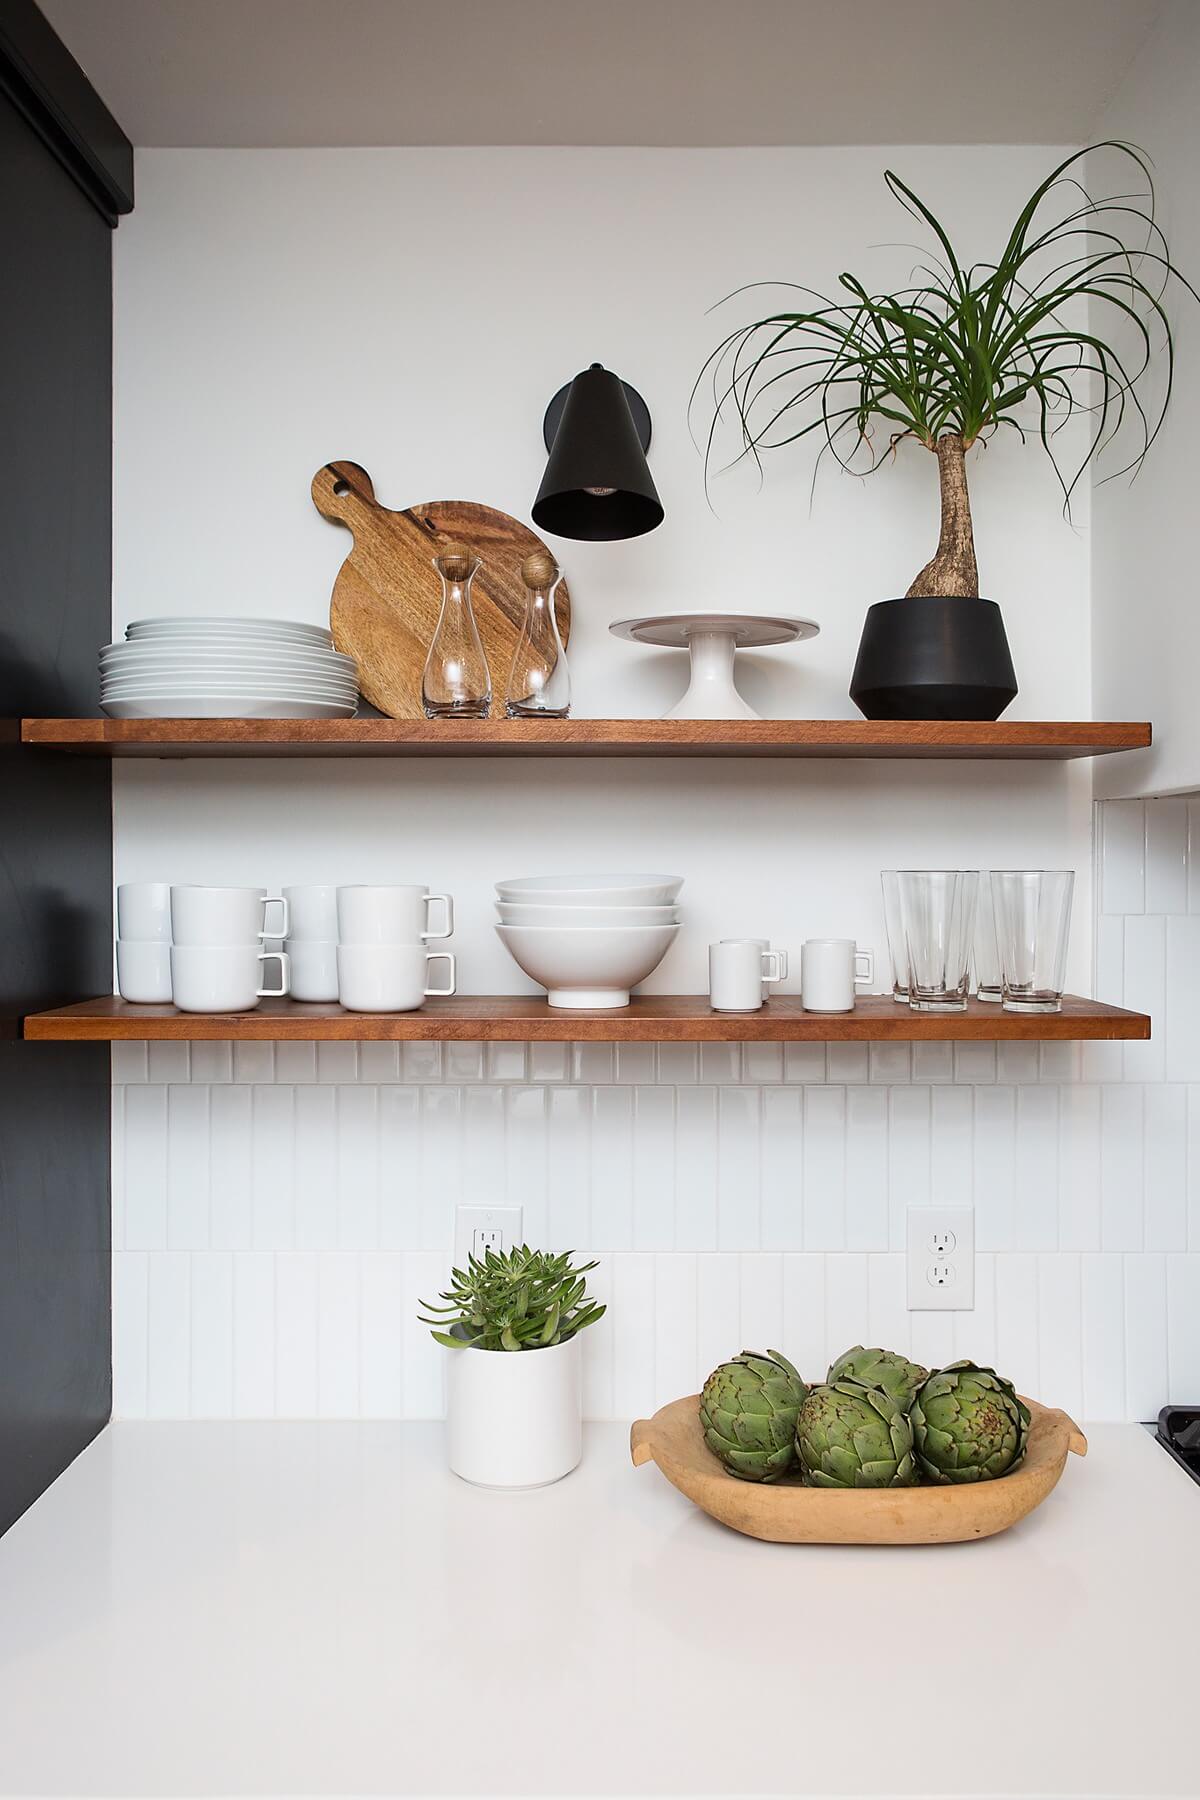 We love the delicate little black sconce over the wooden floating shelves. Image: Ashley Lauren Studios